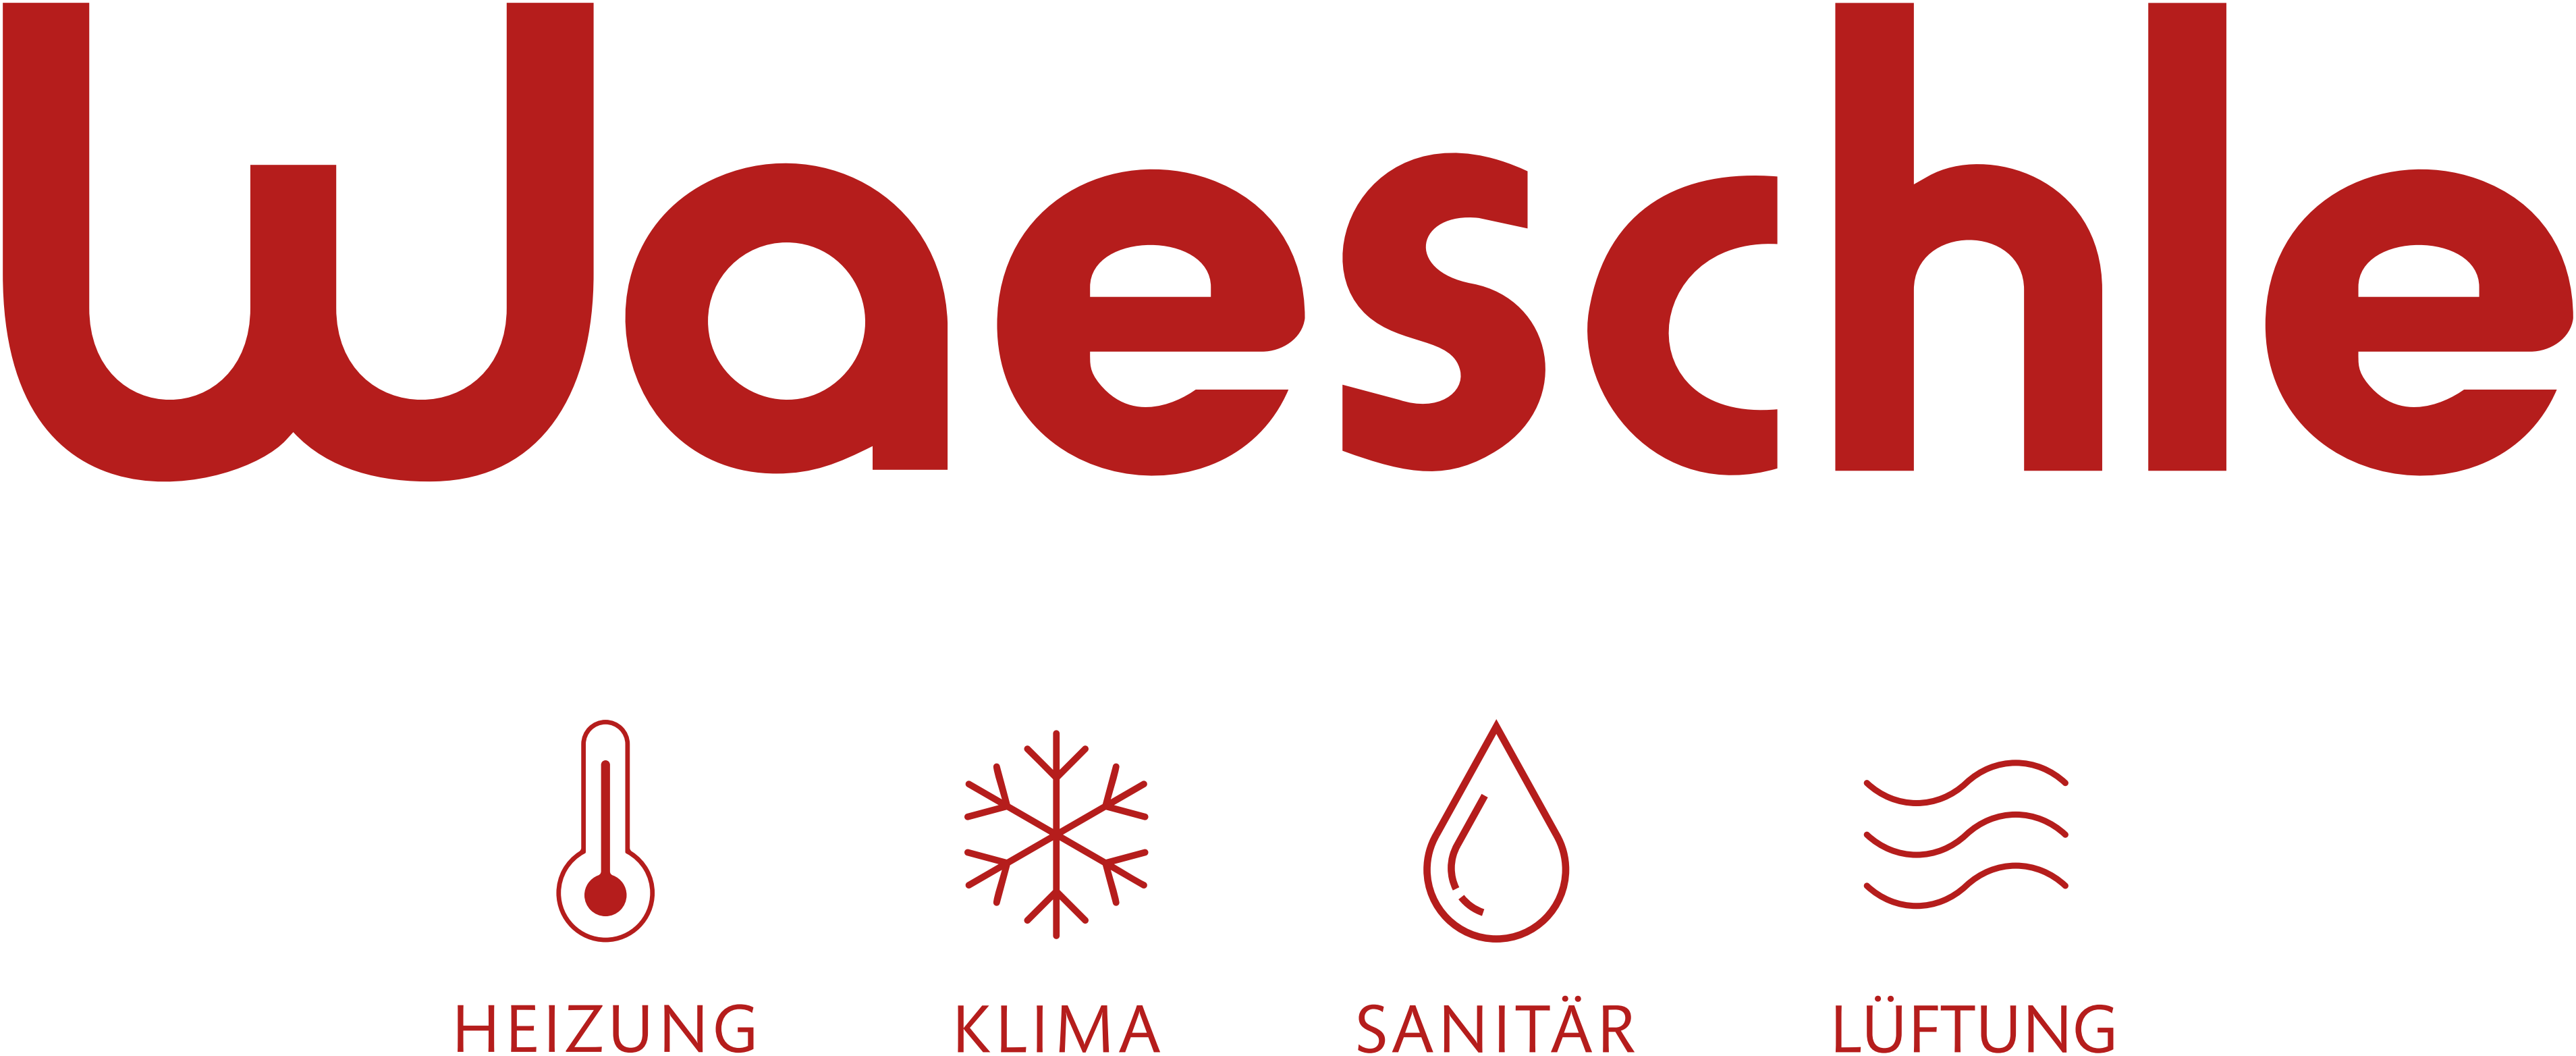 waeschle logo icons cmyk 1